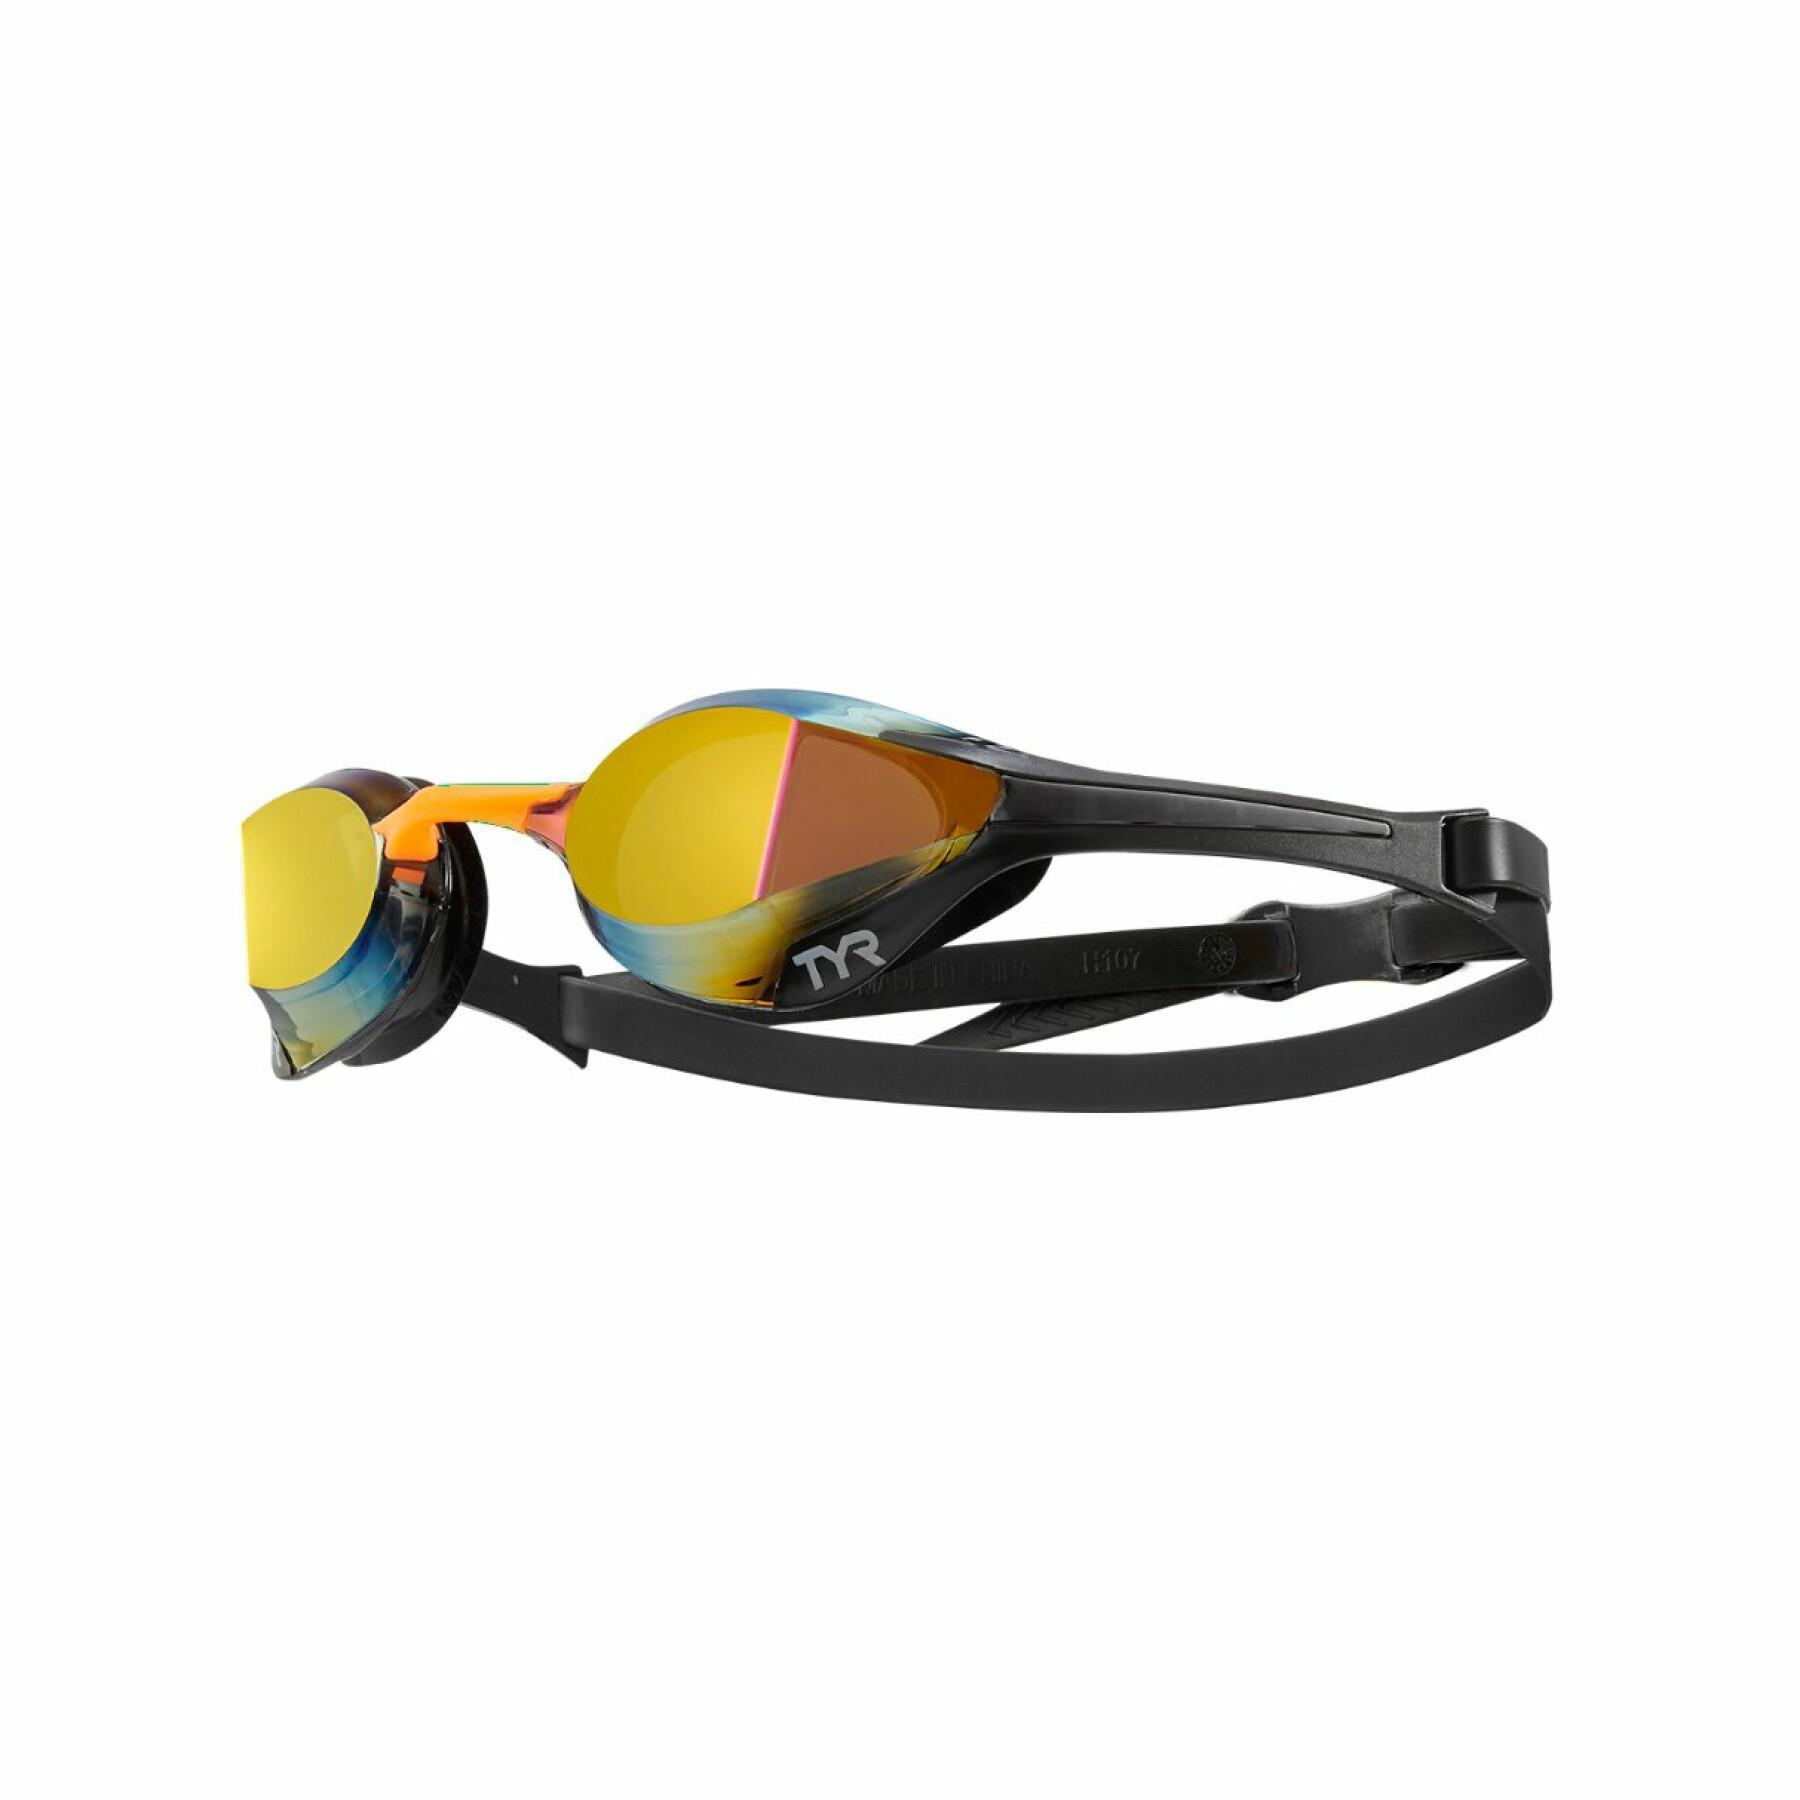 Occhiali da nuoto TYR tracer-x elite mirrored racing goggles